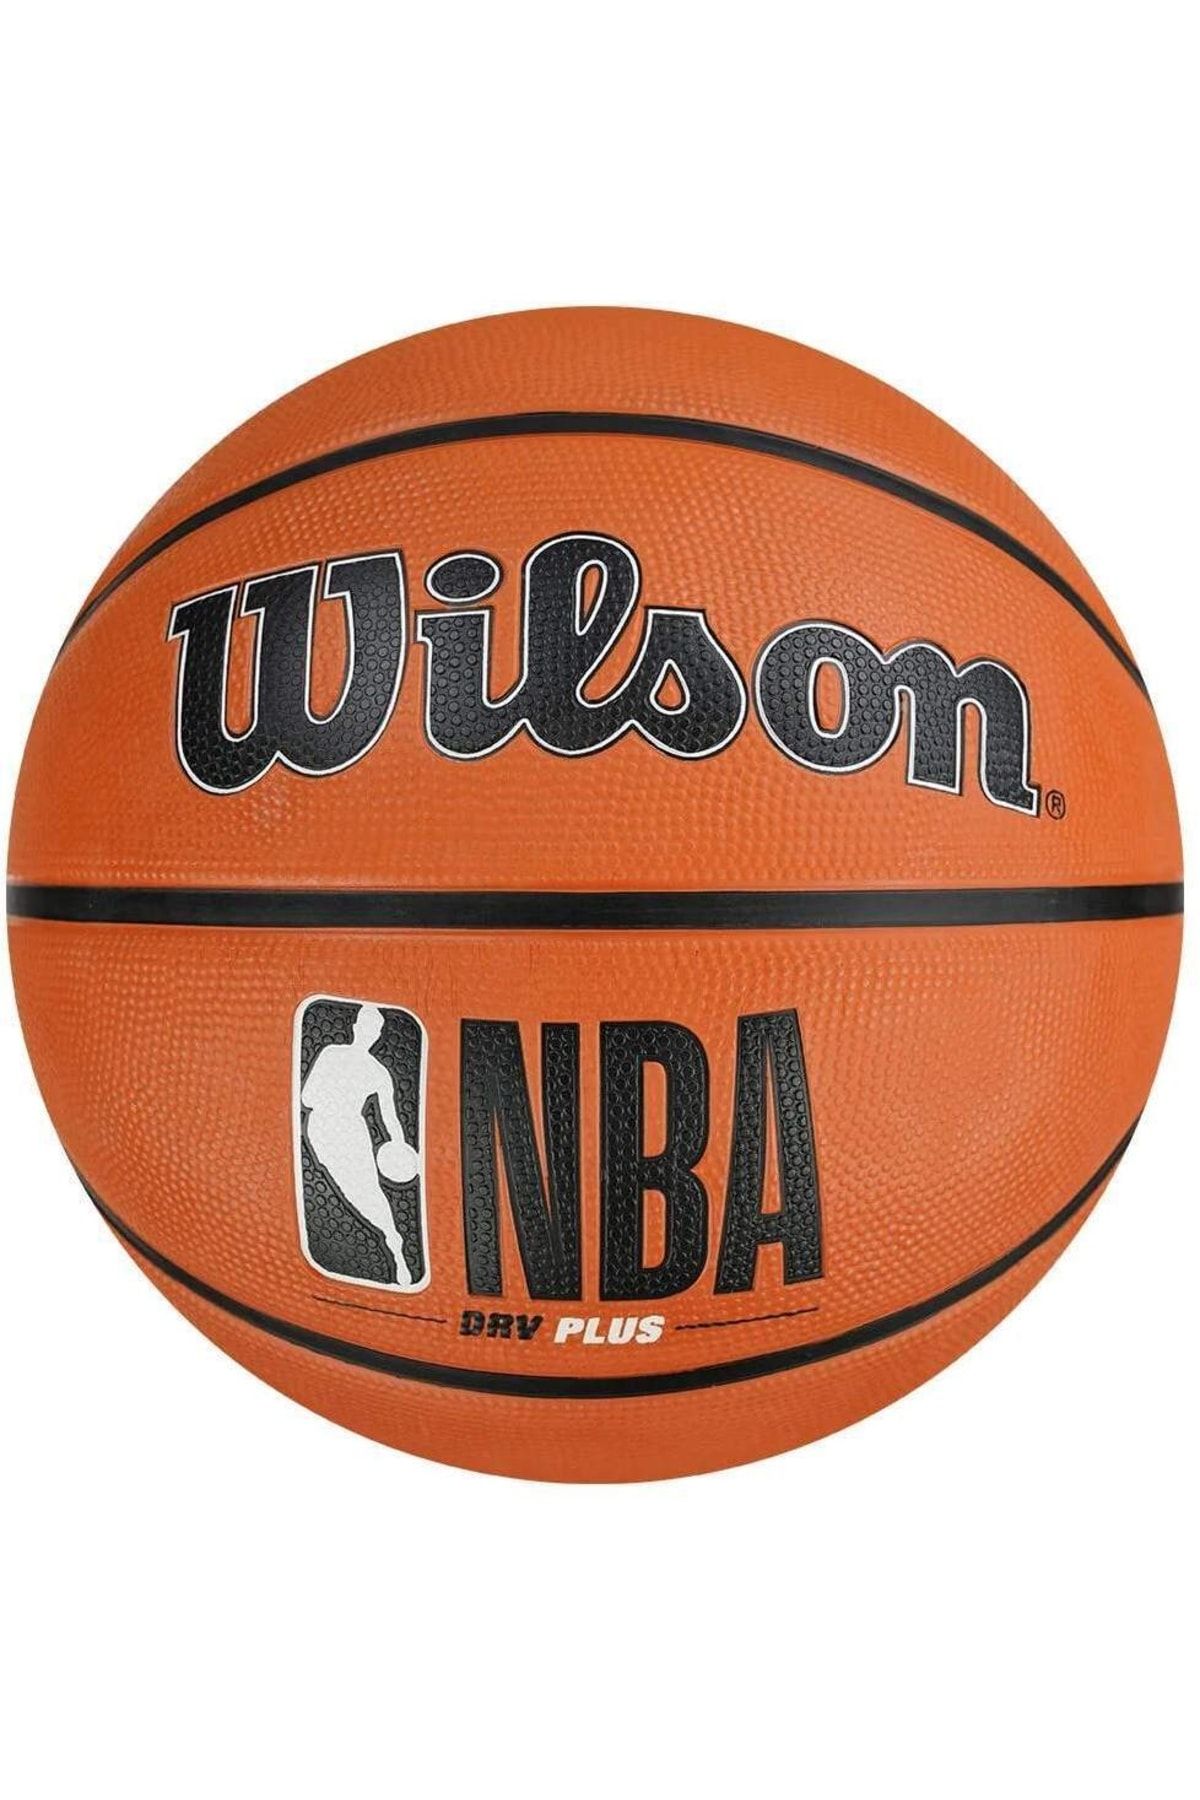 Wilson Nba Drv Plus Basketbol Topu Size 6 wtb9200x